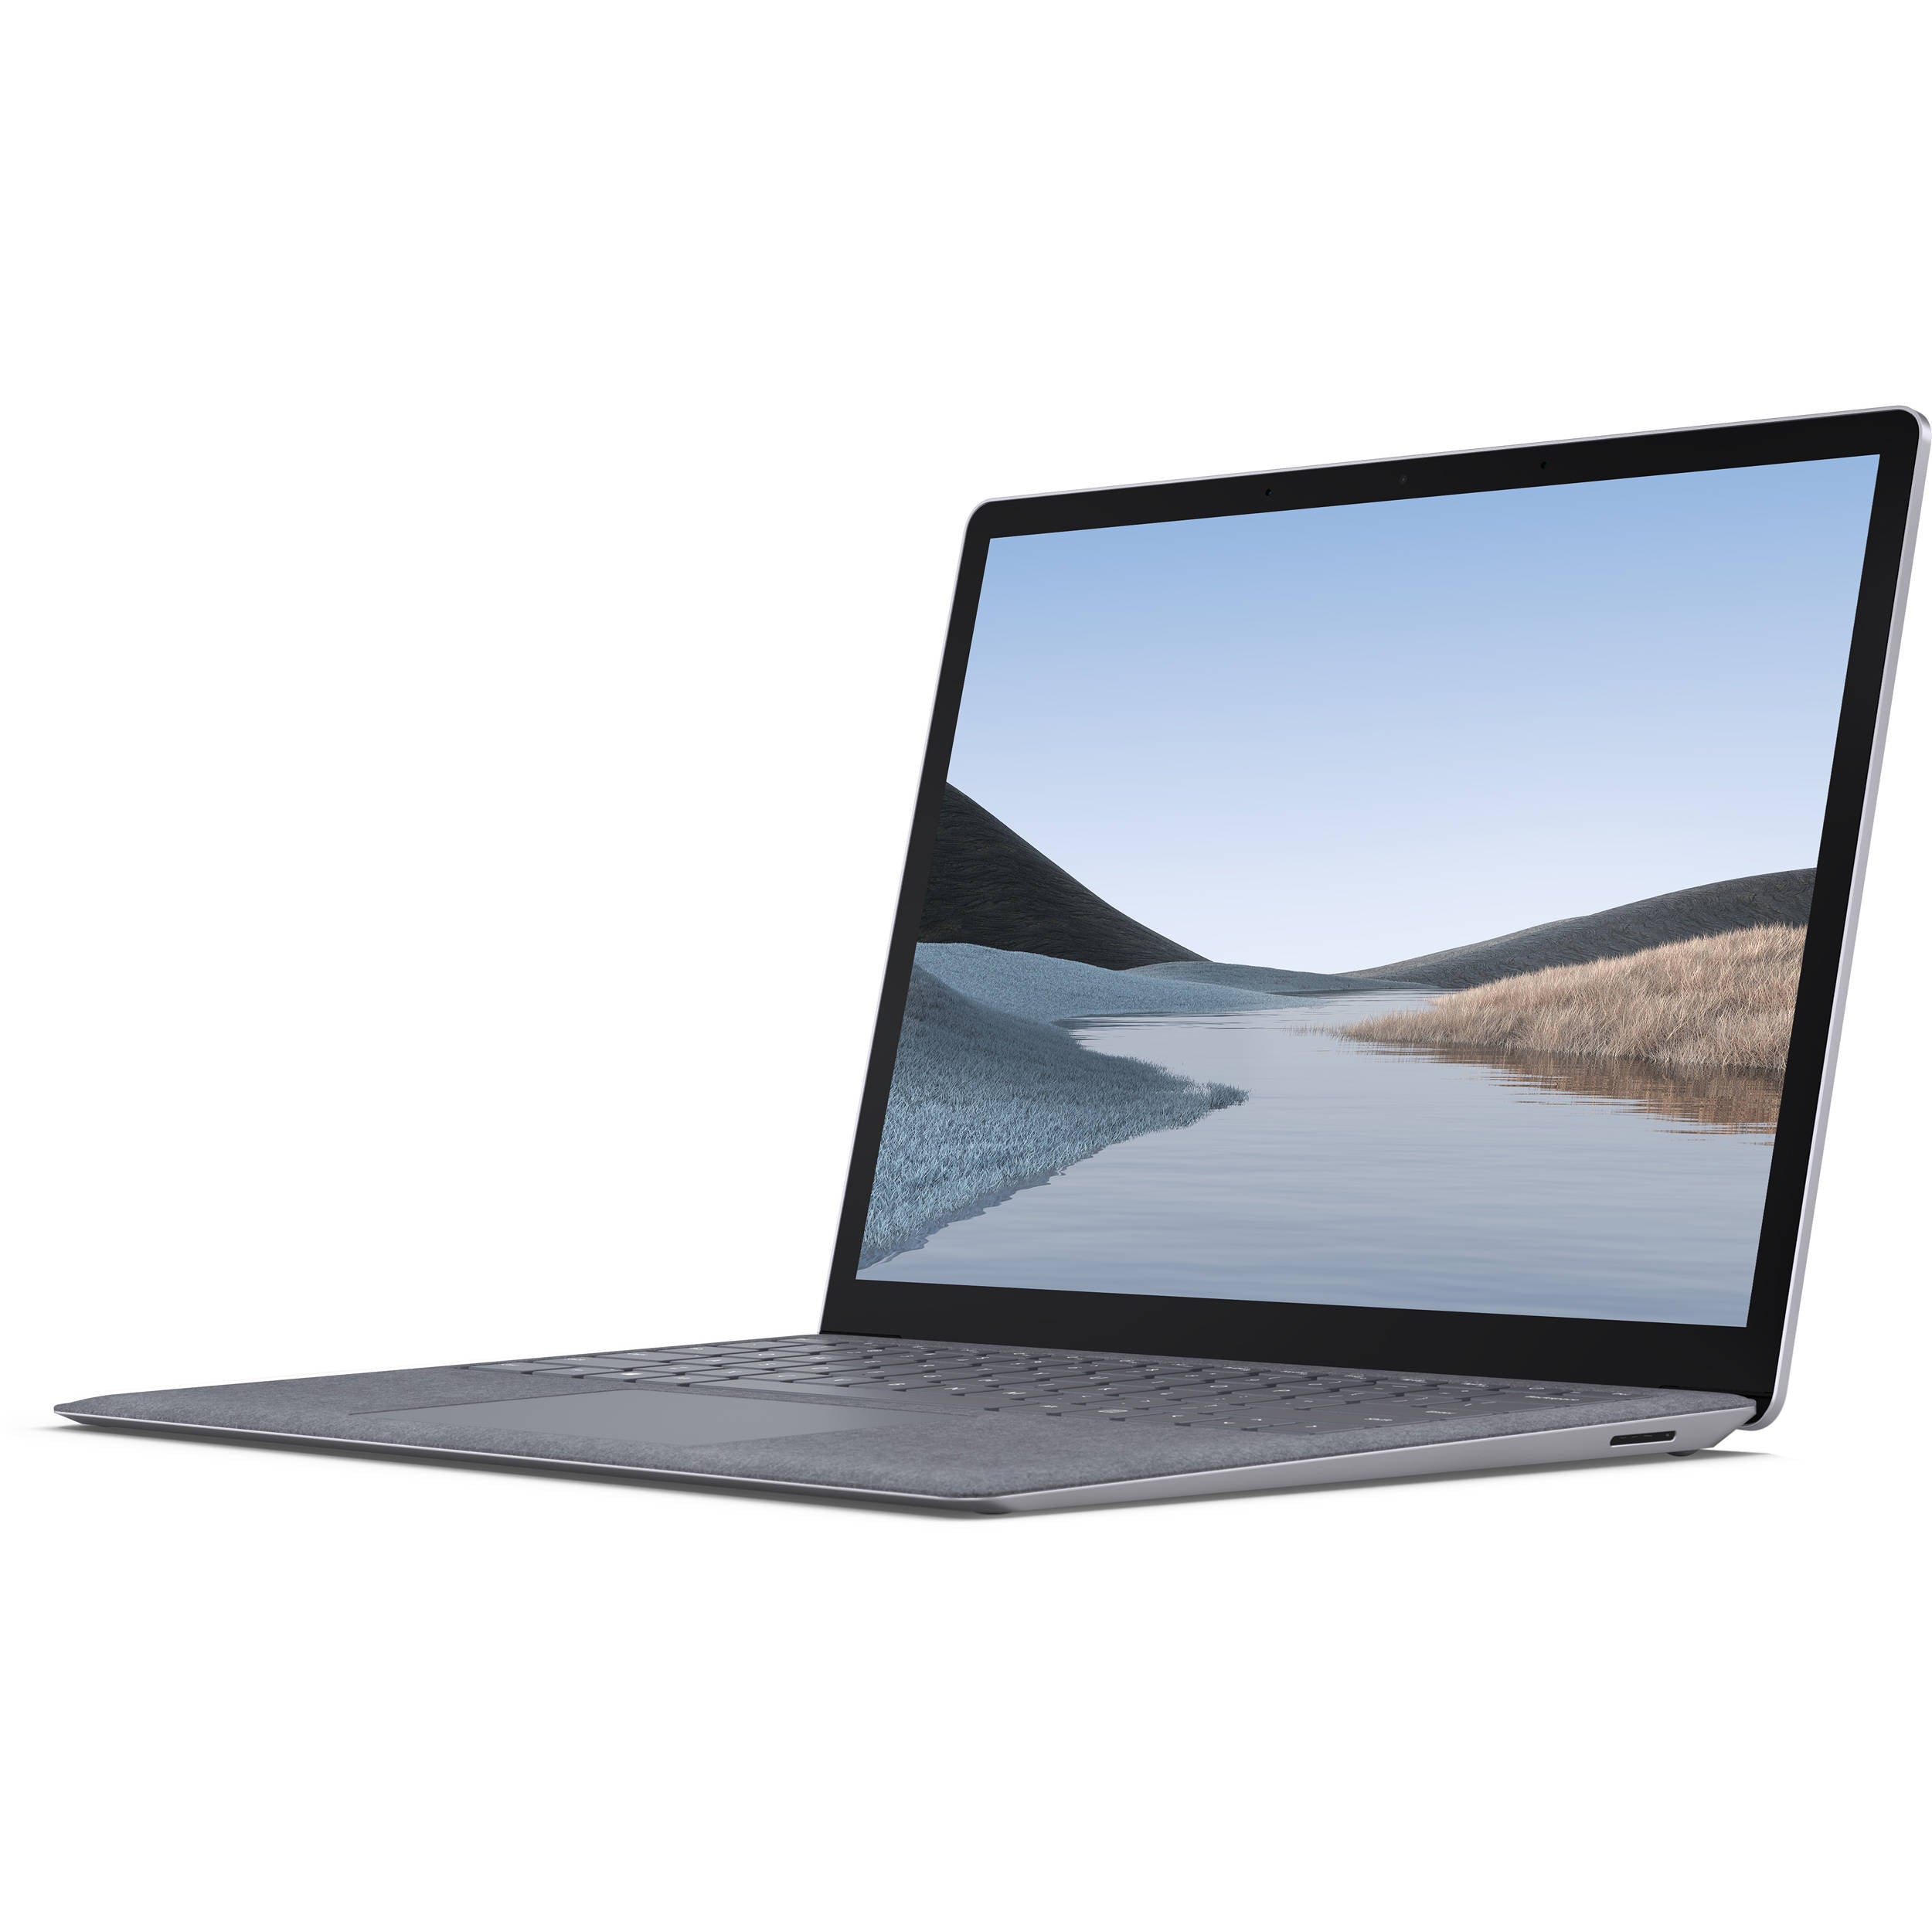 Microsoft Surface Laptop 3 Core i7 16GB 512GB SSD Win10 Pro 13inch - Platinum